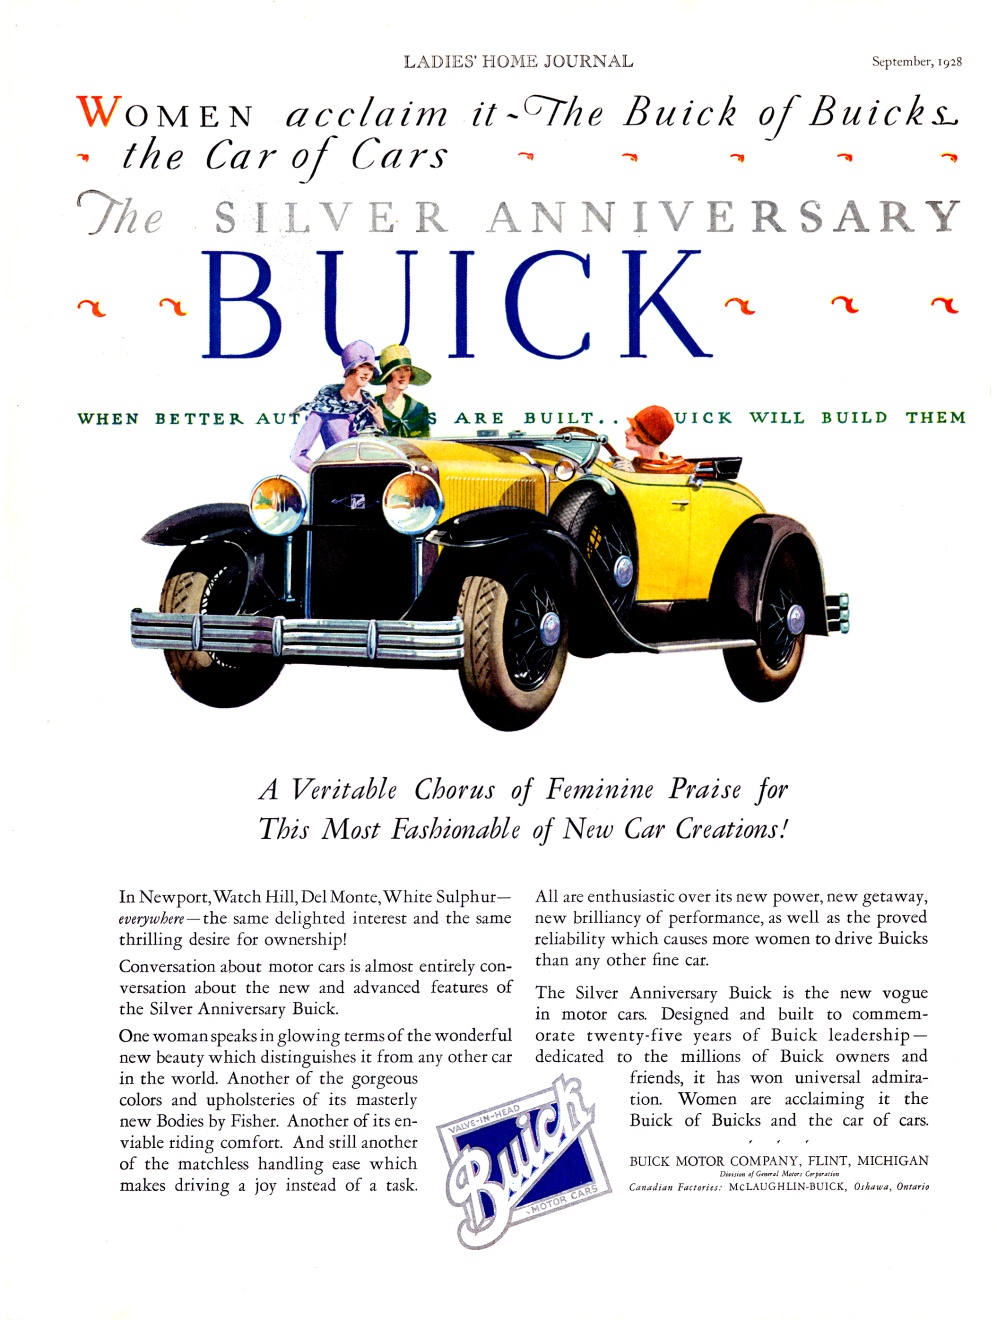 1929 Buick Auto Advertising